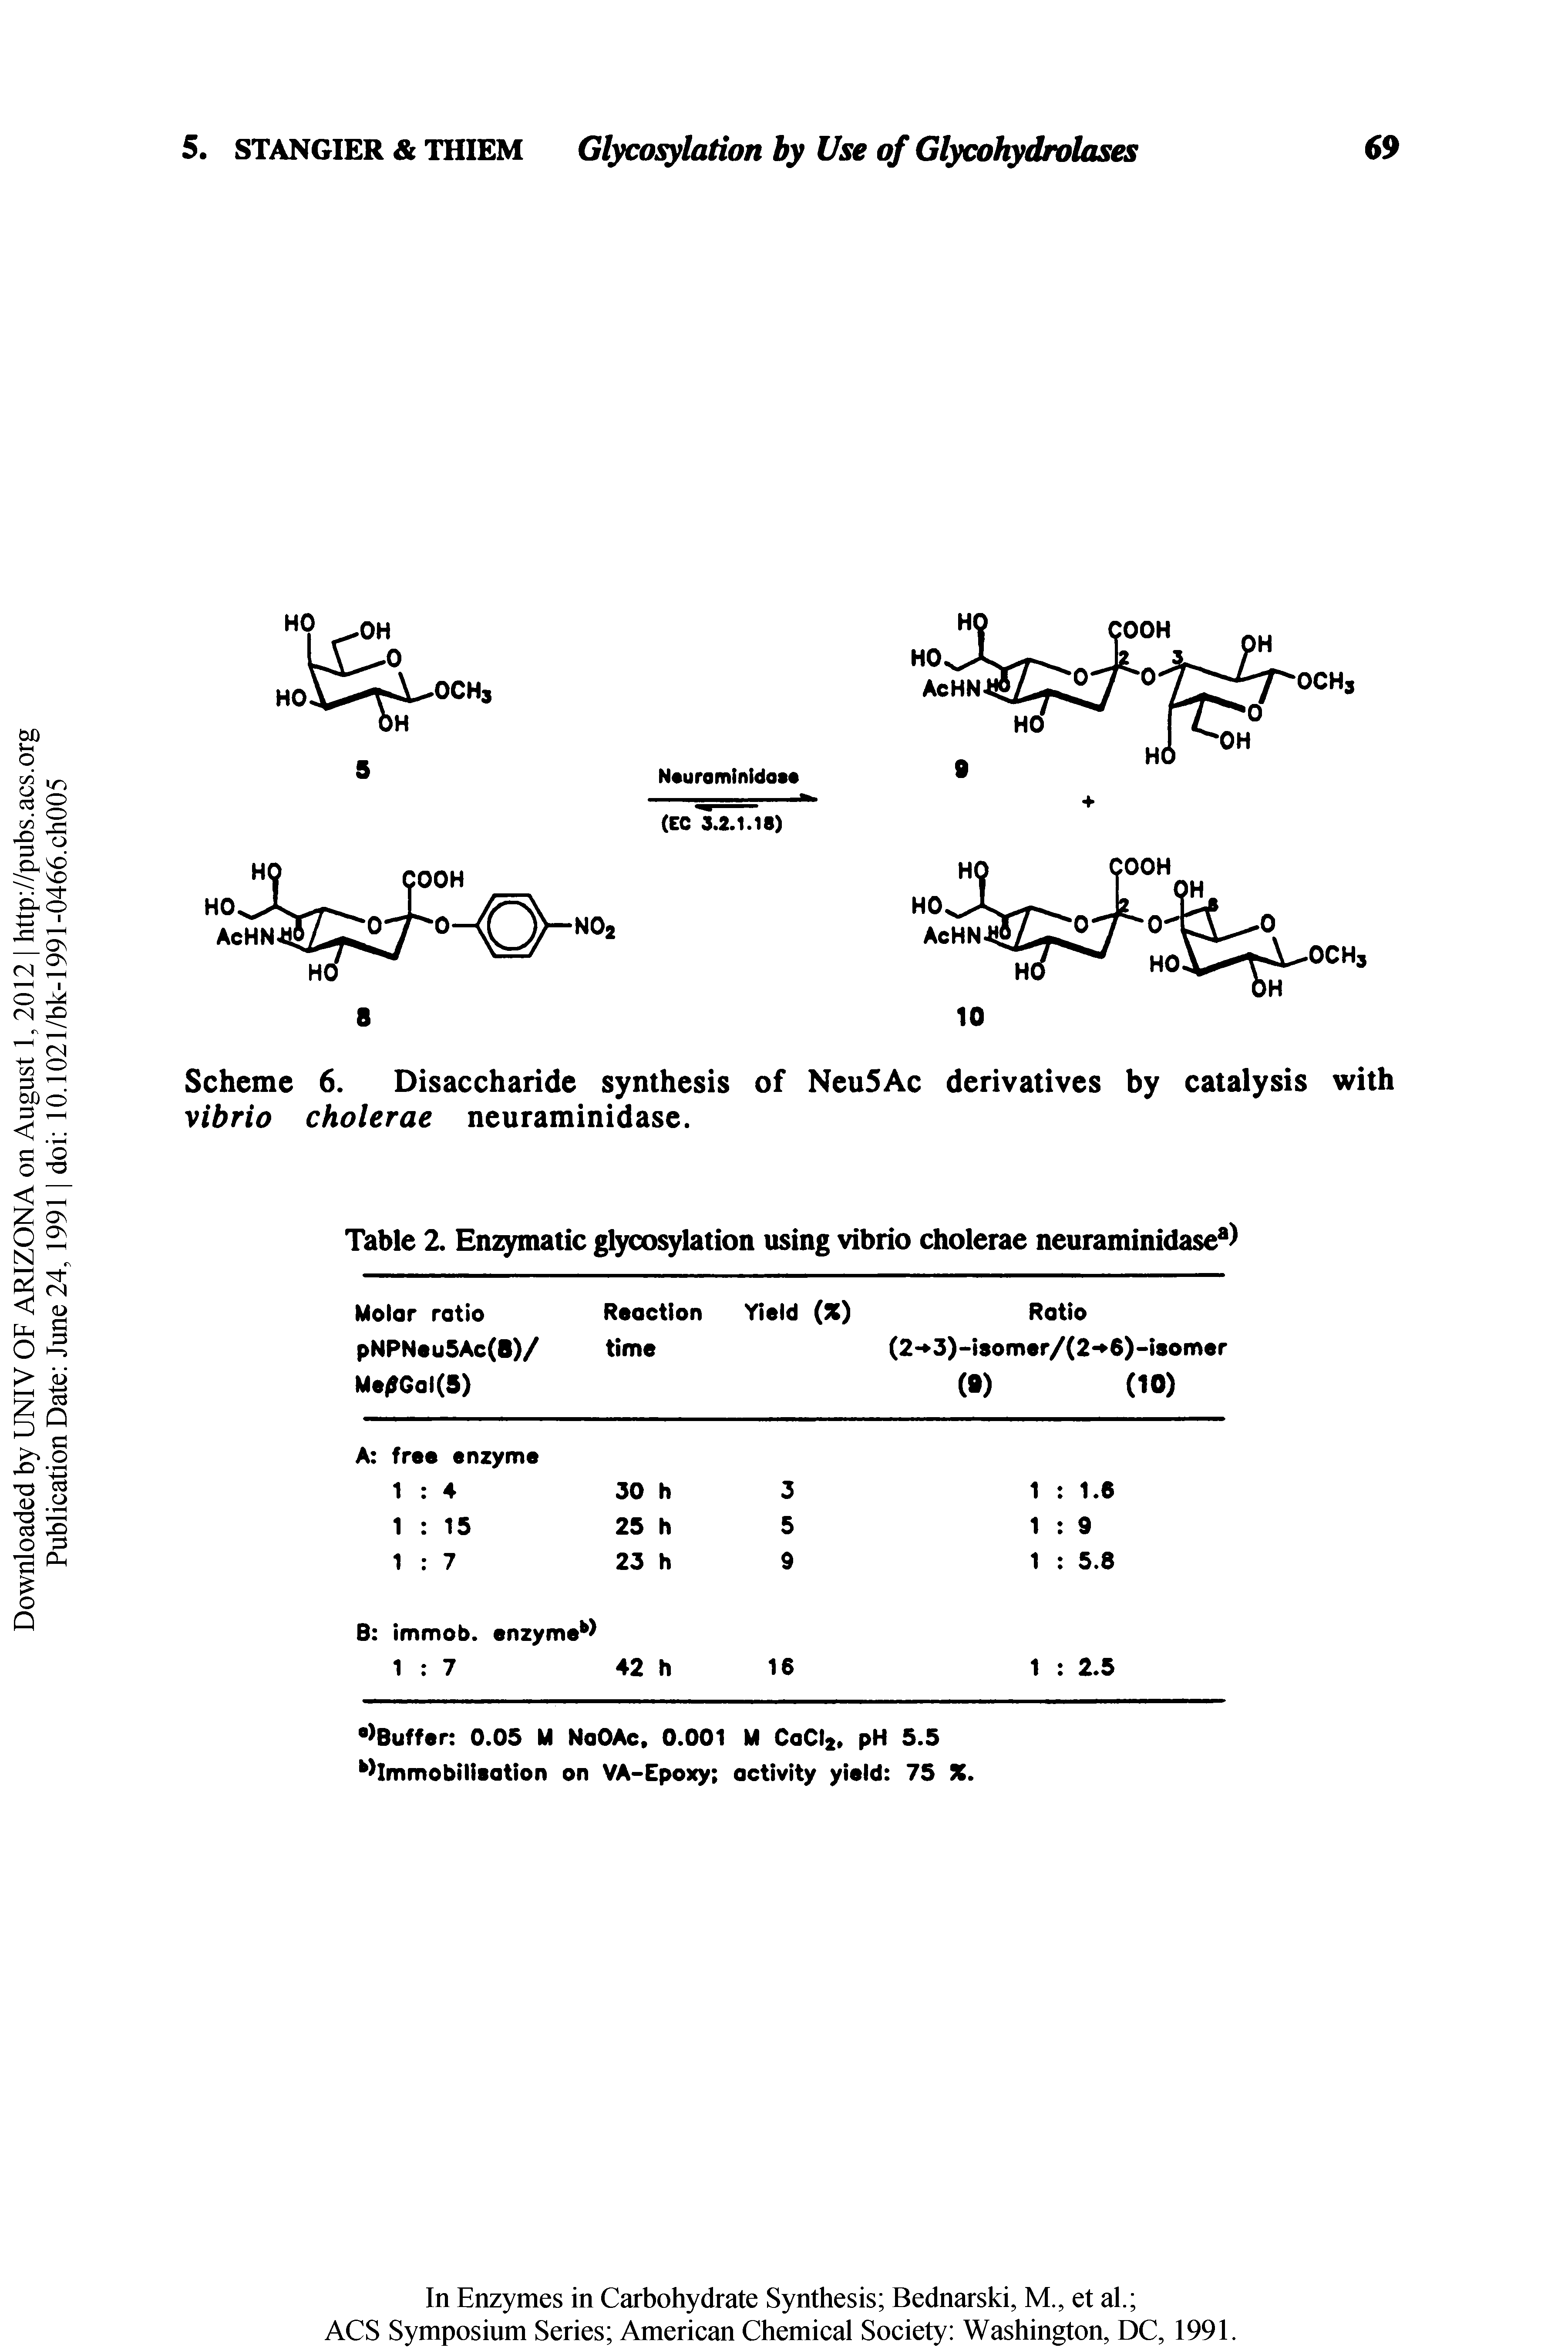 Scheme 6. Disaccharide synthesis of NeuSAc derivatives by catalysis with vibrio cholerae neuraminidase.